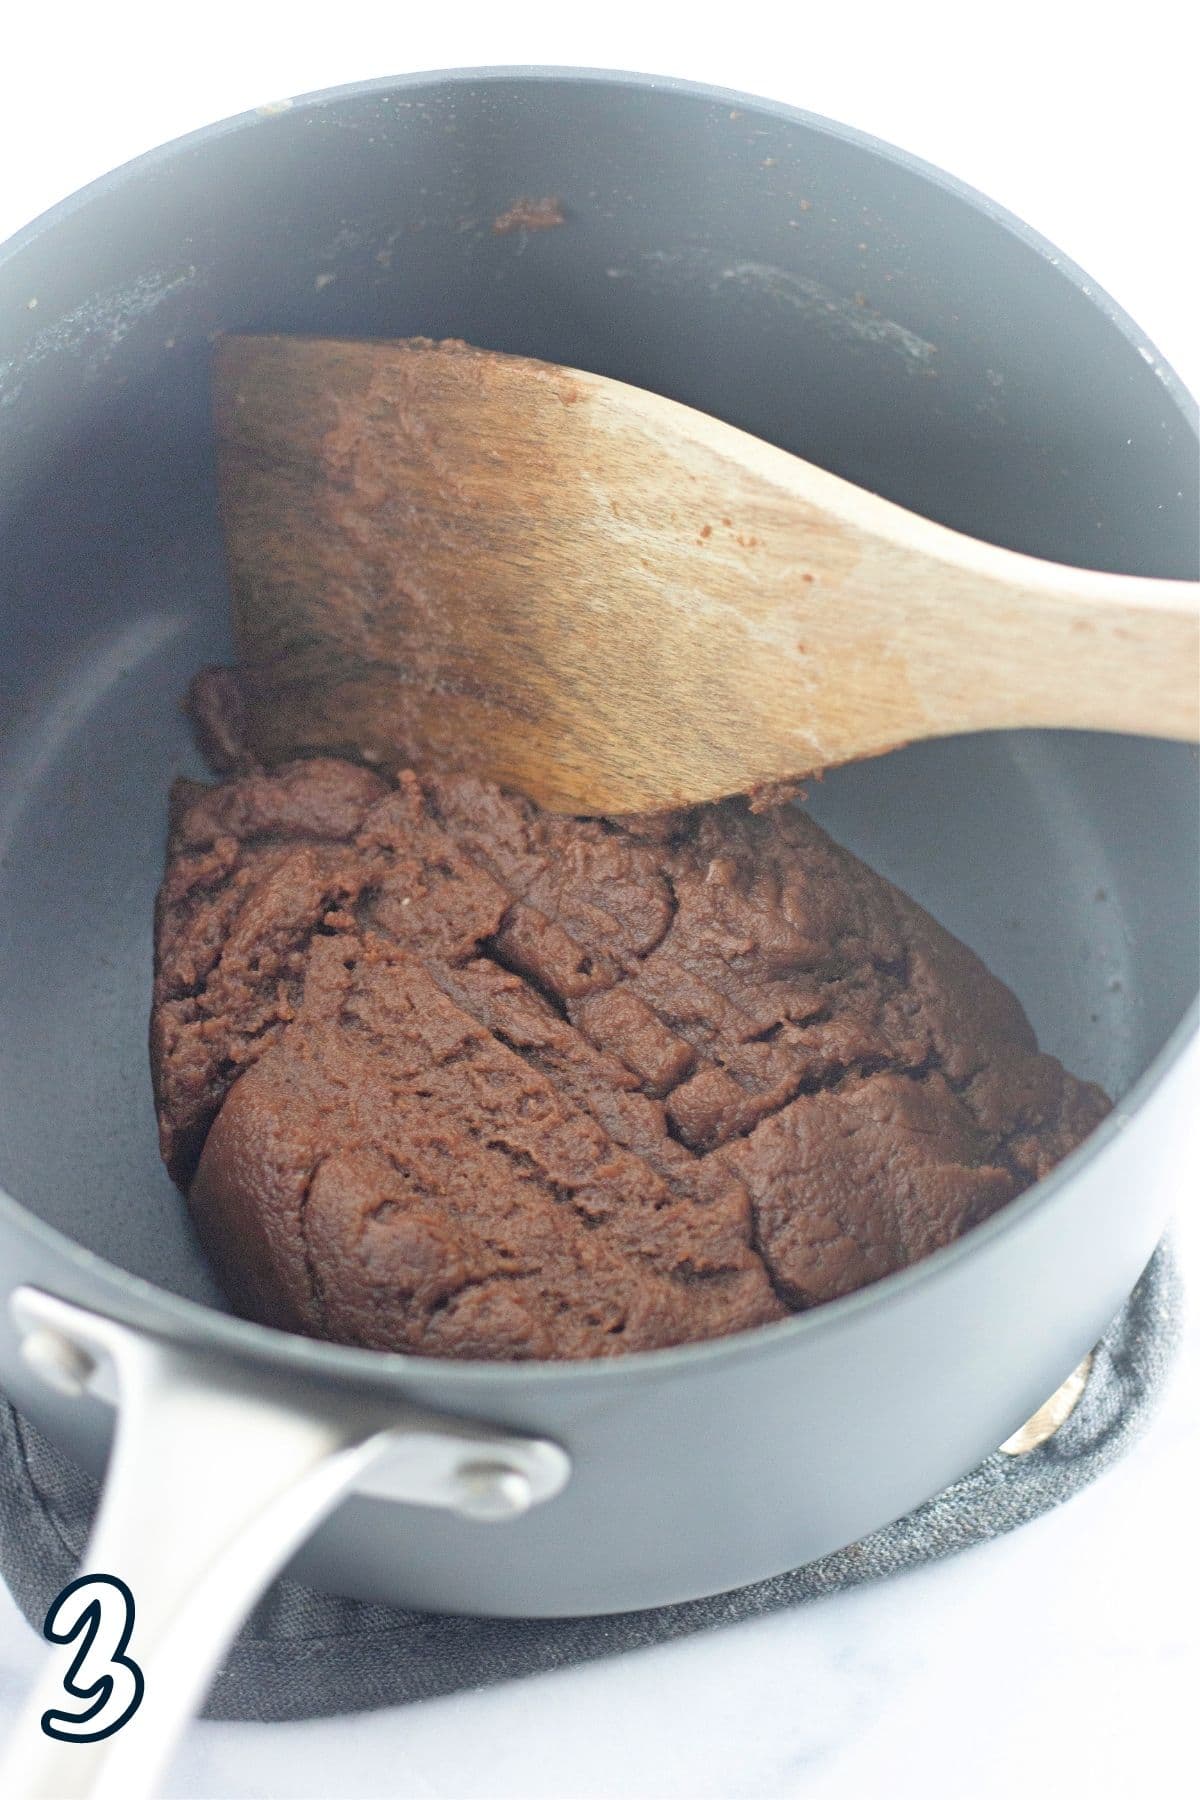 Cream puff dough in a sauce pan. 